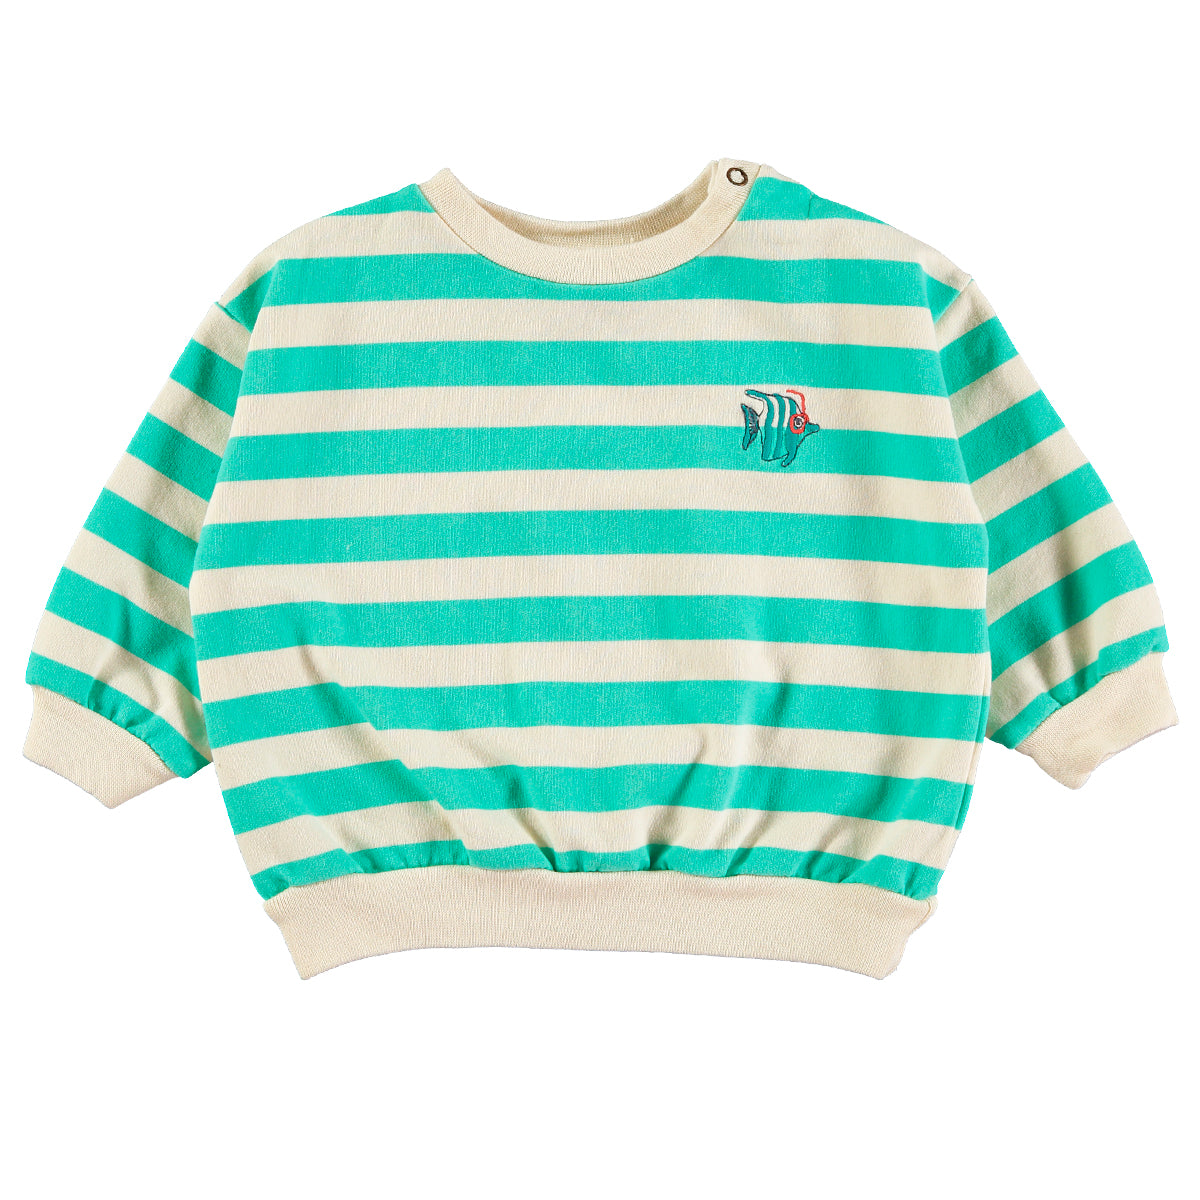 Lotie Kids - baby sweatshirt - fish - stripes